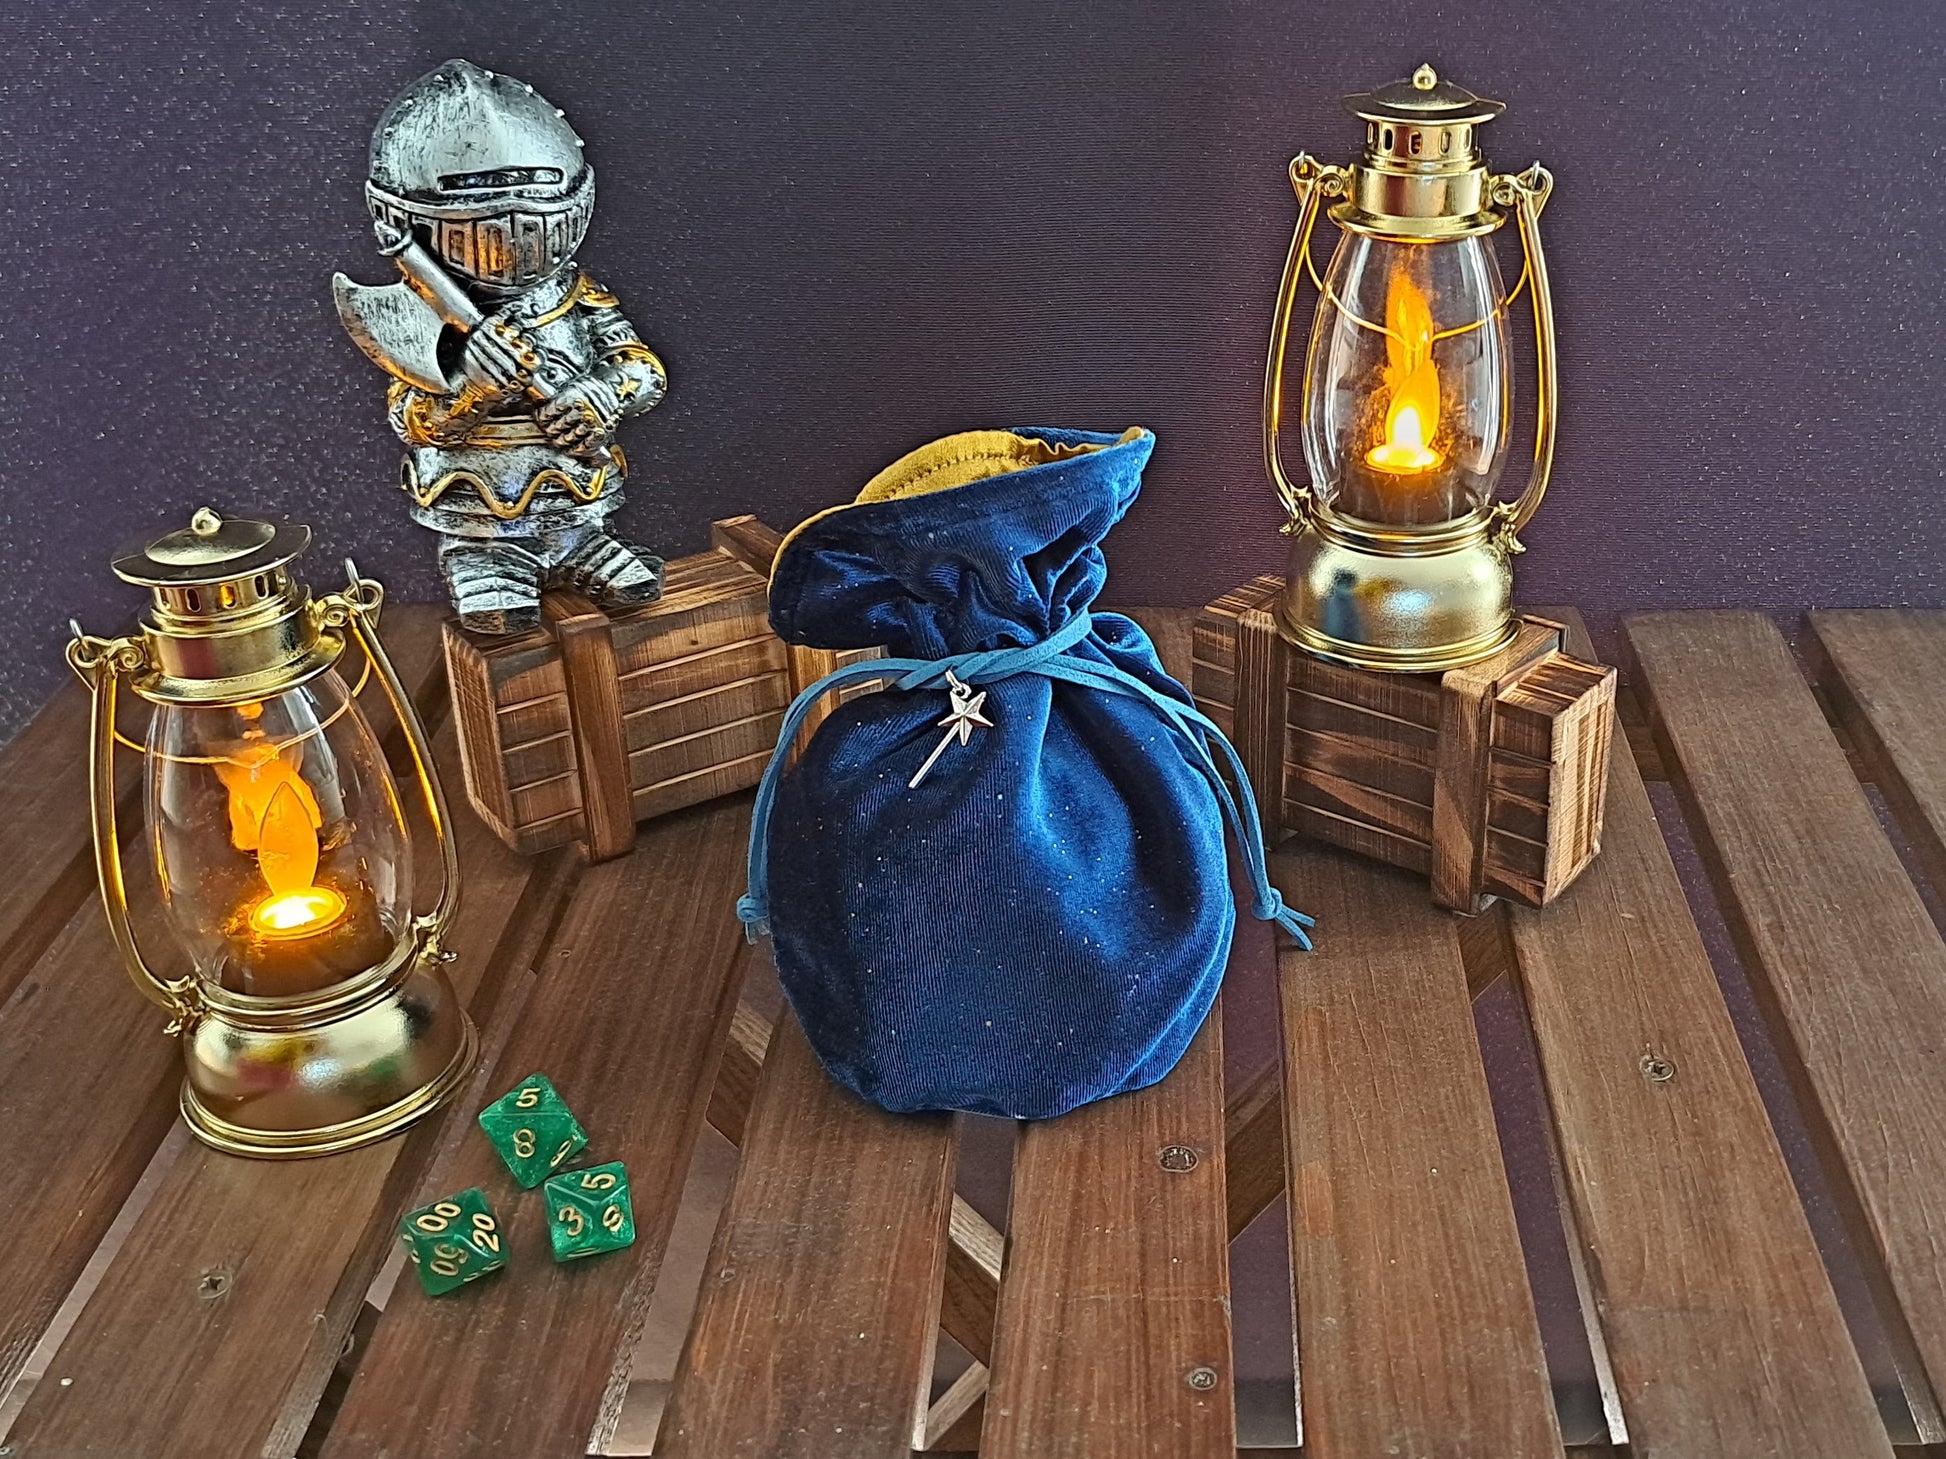 Handmade dice bag made out of sparkly blue fabric